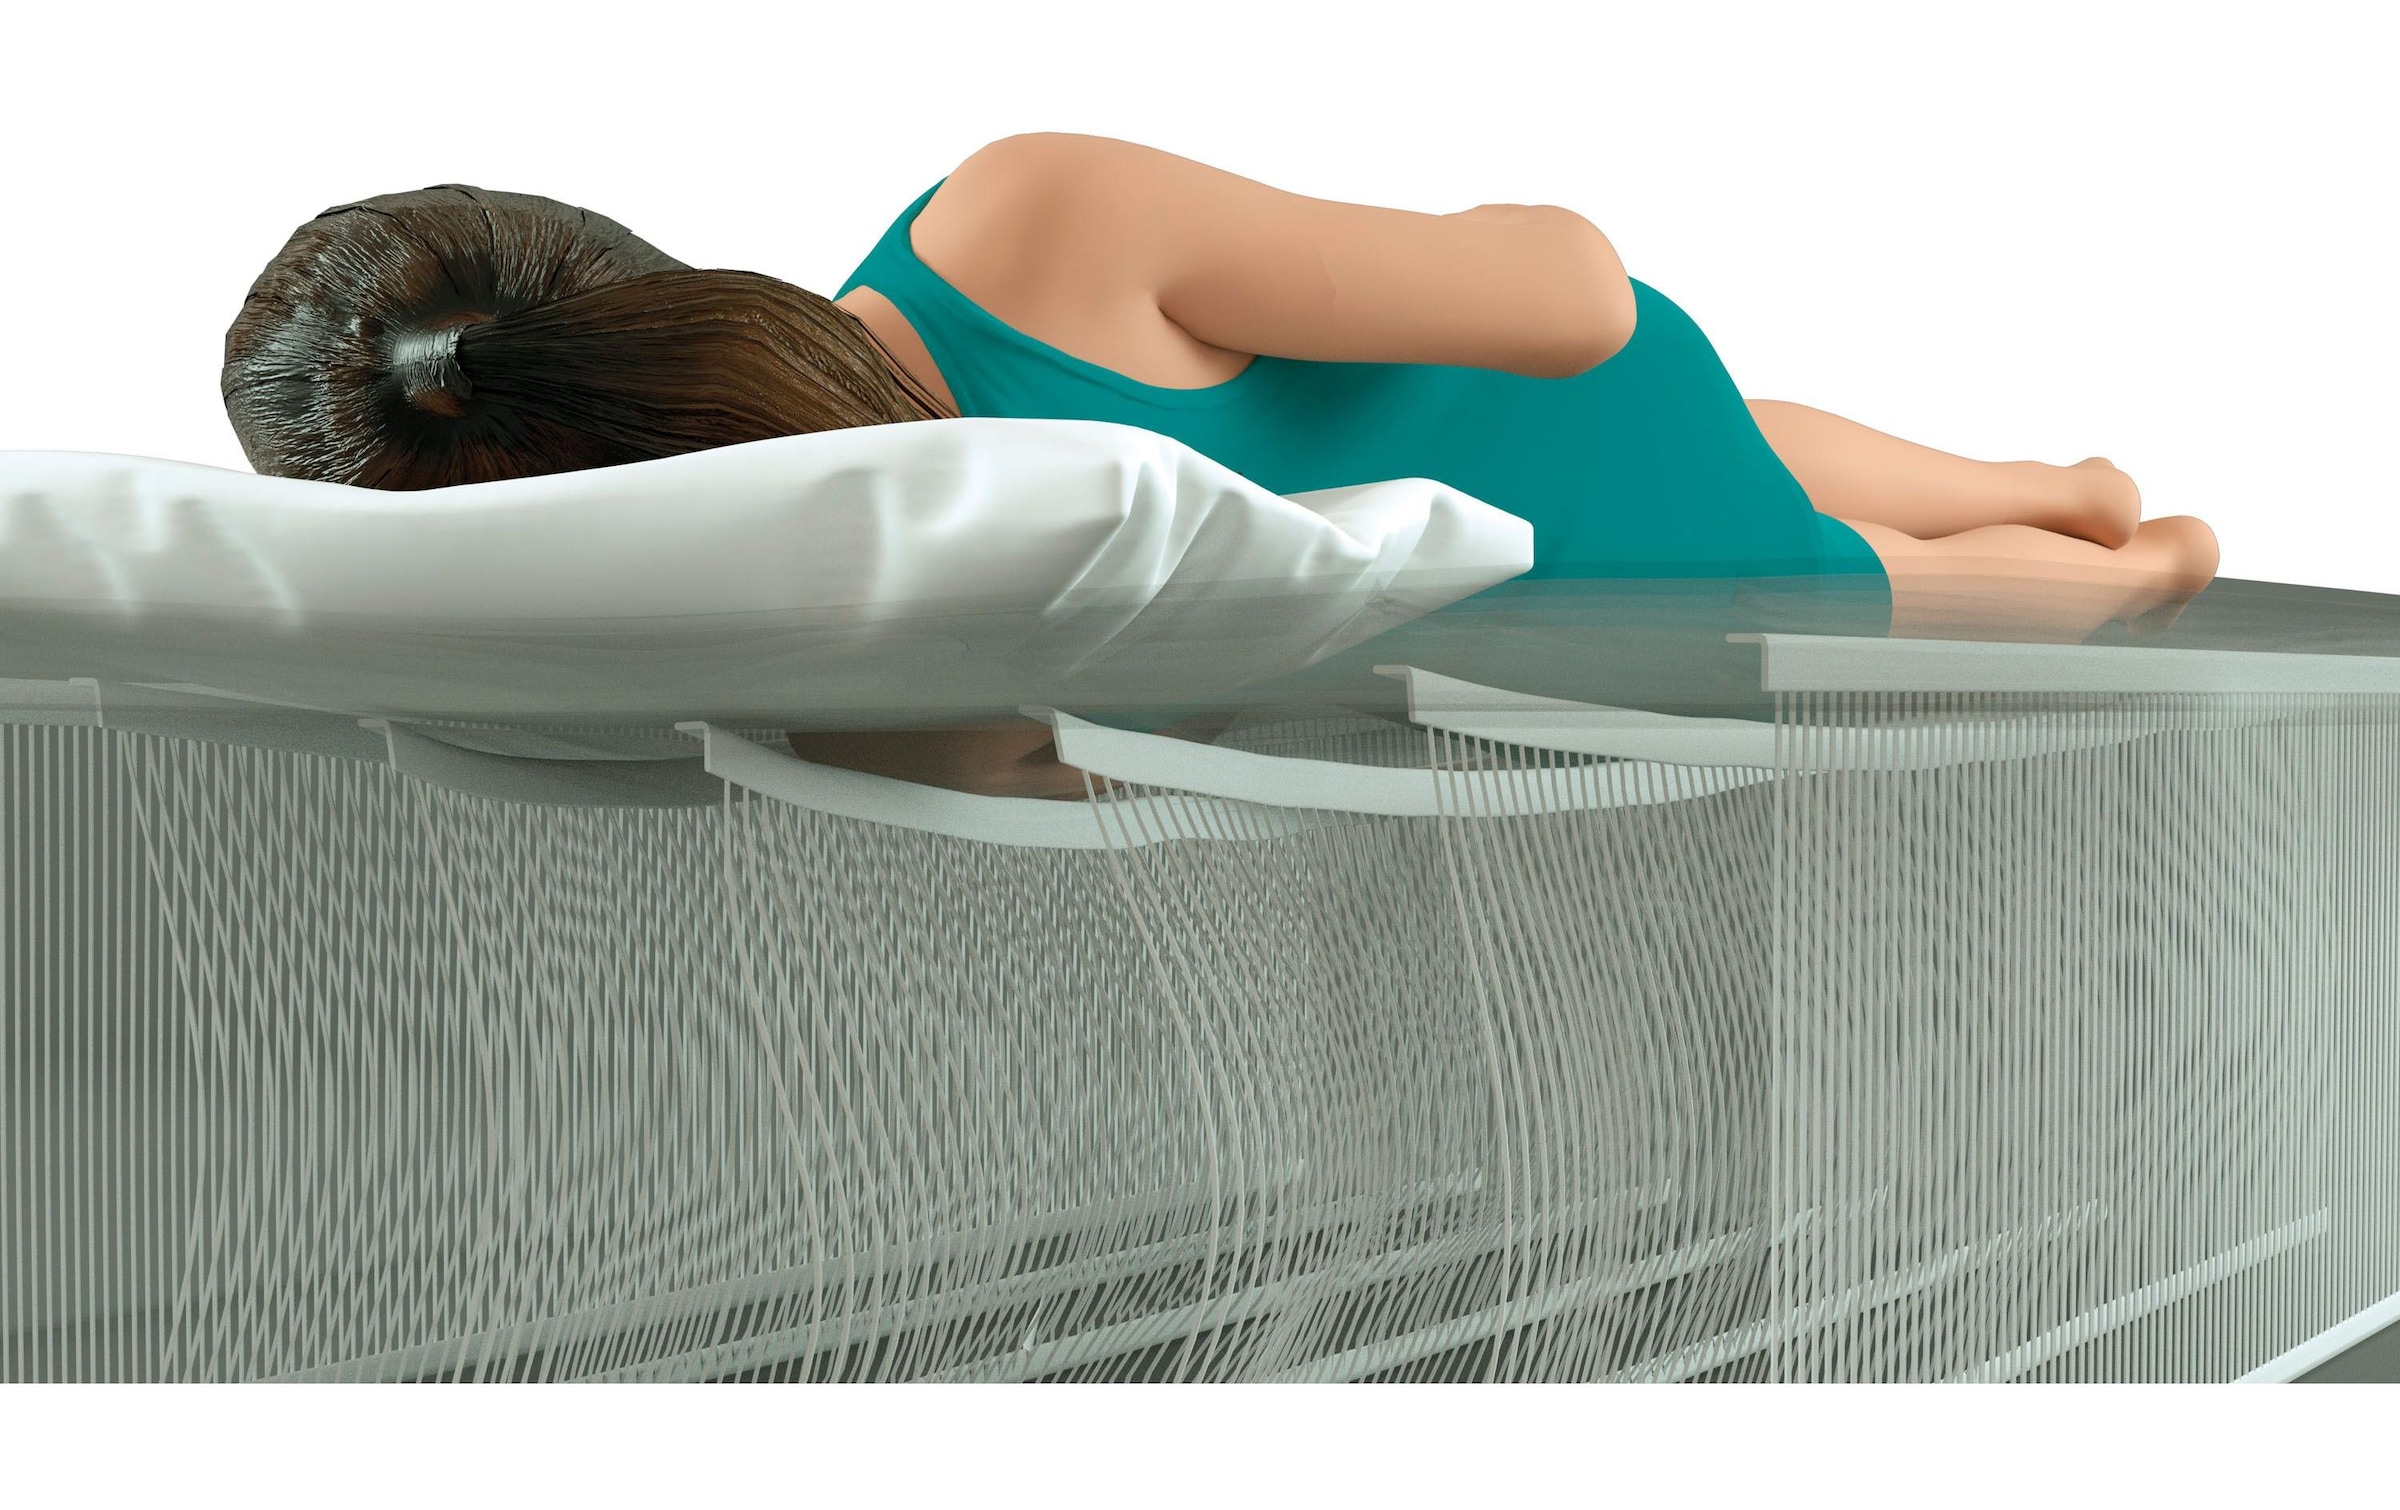 Intex Luftmatratze »DuraBeam Standard Pillow Rest Classic«